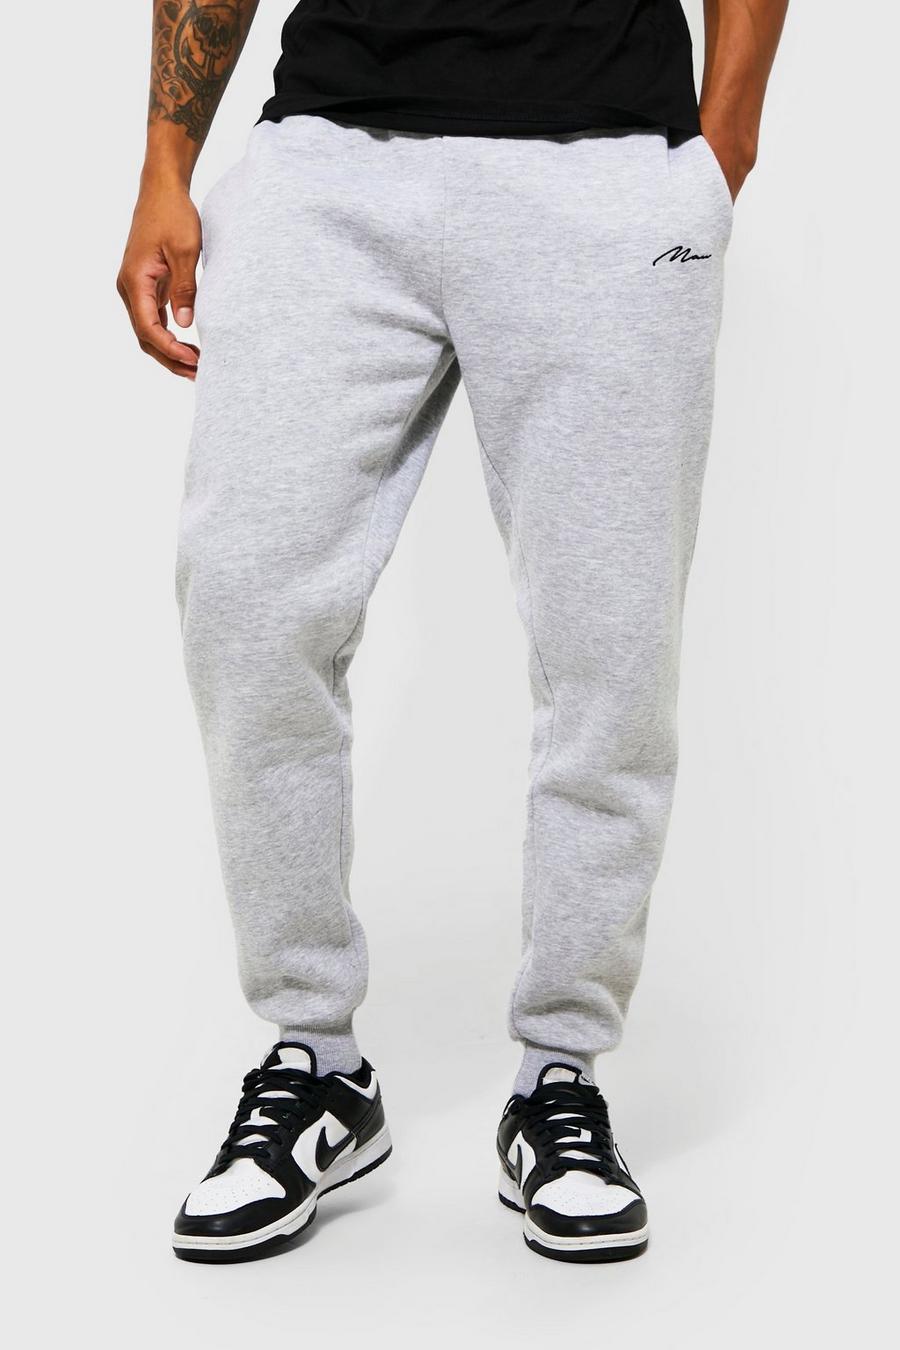 Pantaloni tuta Slim Fit con scritta Man, Grey marl grigio